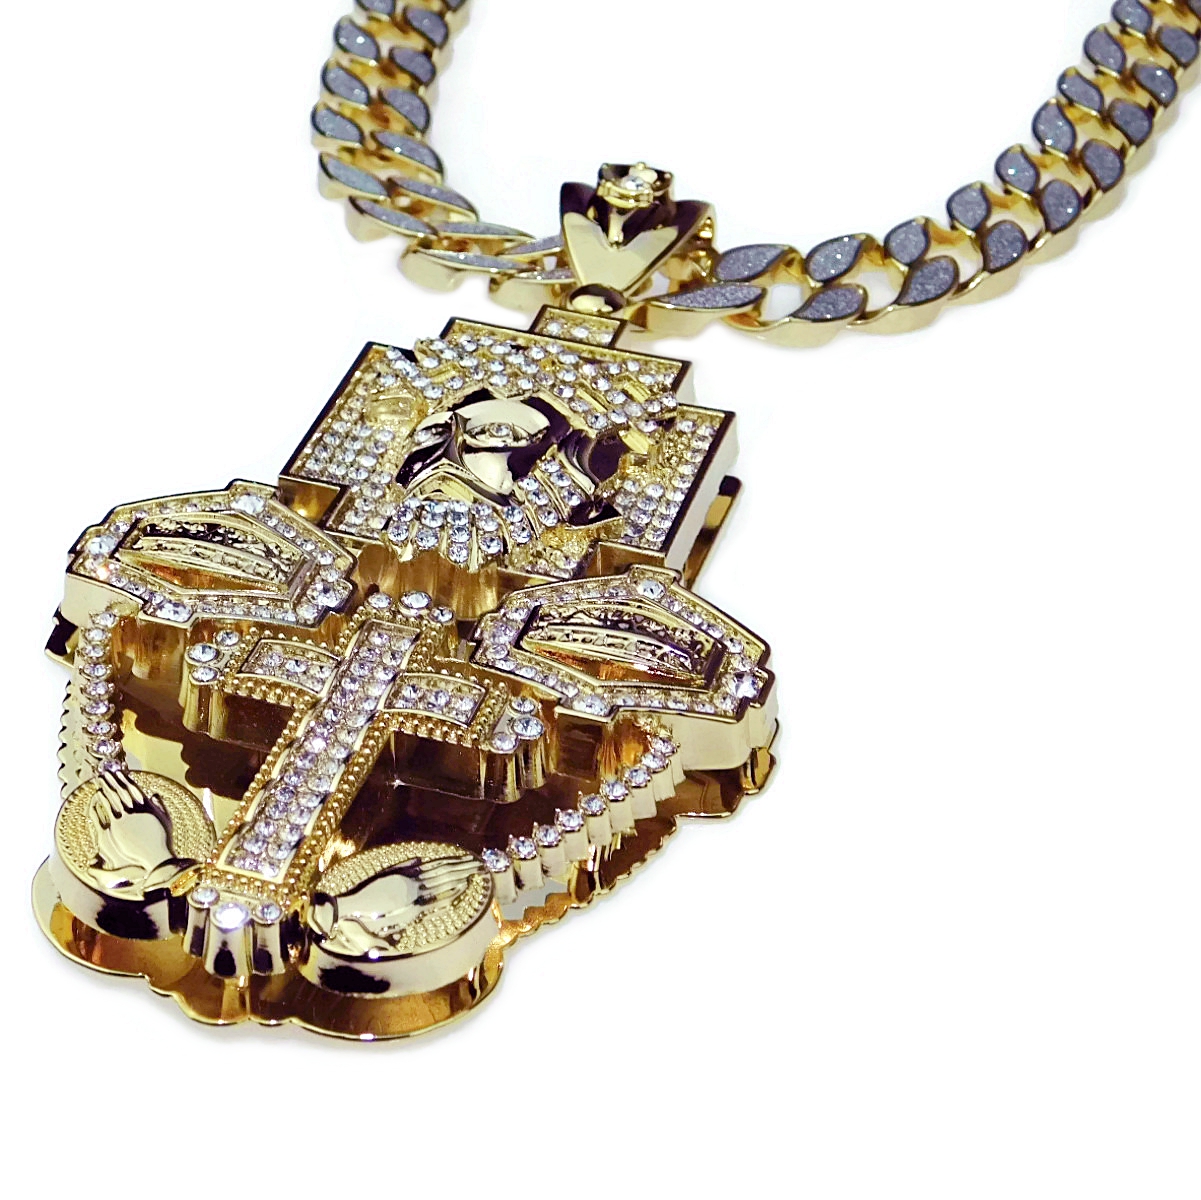 Huge Jesus Piece Chain Last Supper Cross 3D Combo Pendant Sand Blast Gold Finish 30" Inch Cuban Link Hip Hop Necklace - image 2 of 7